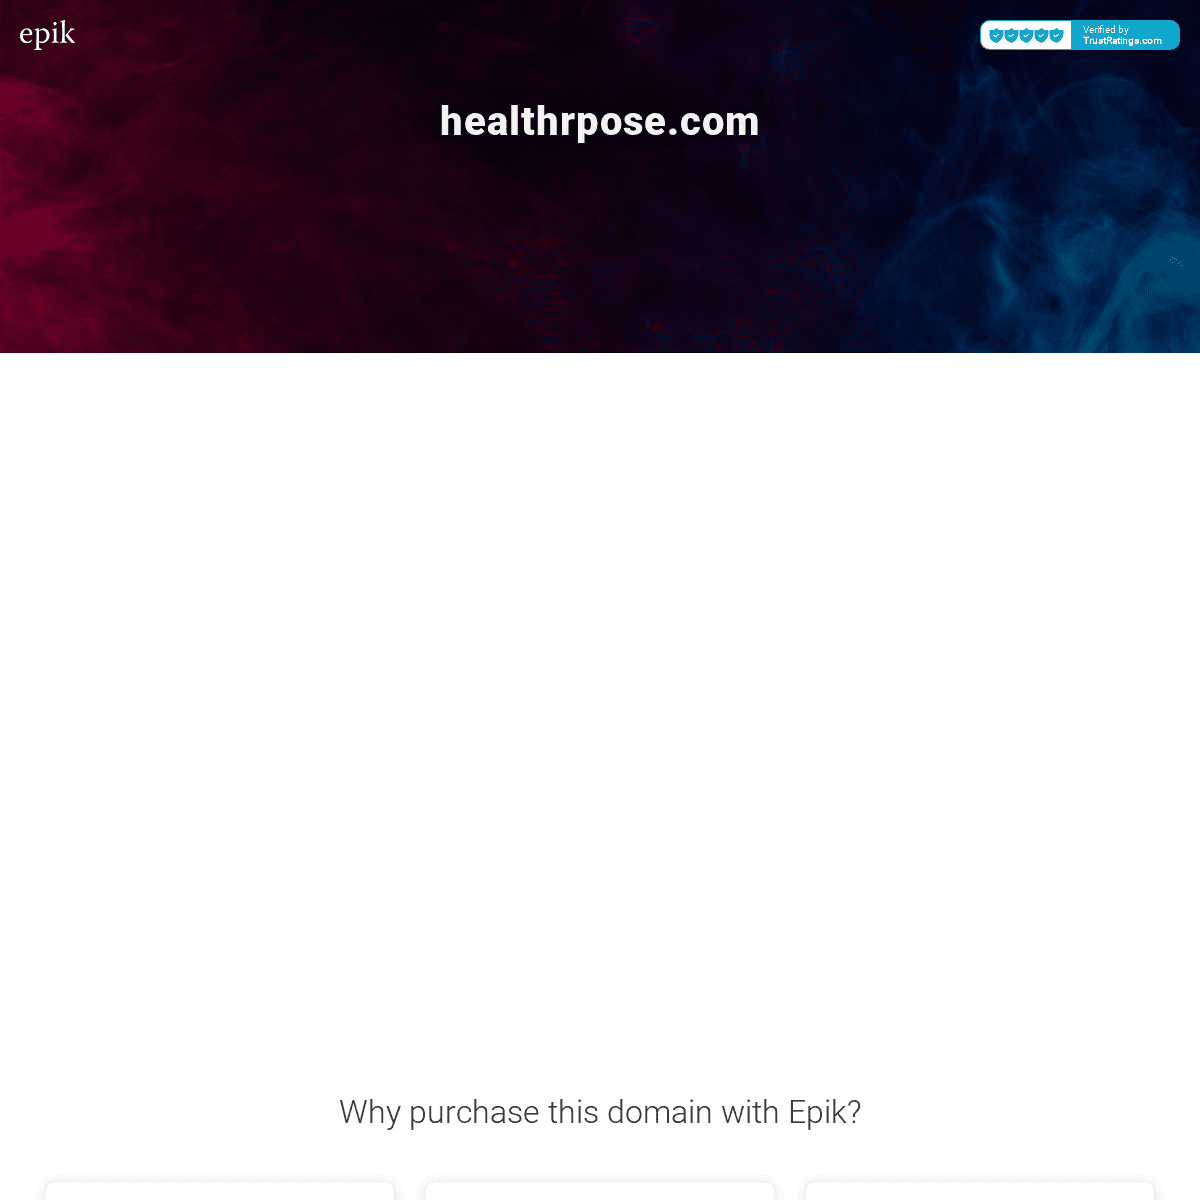 healthrpose.com - contact with domain owner - Epik.com